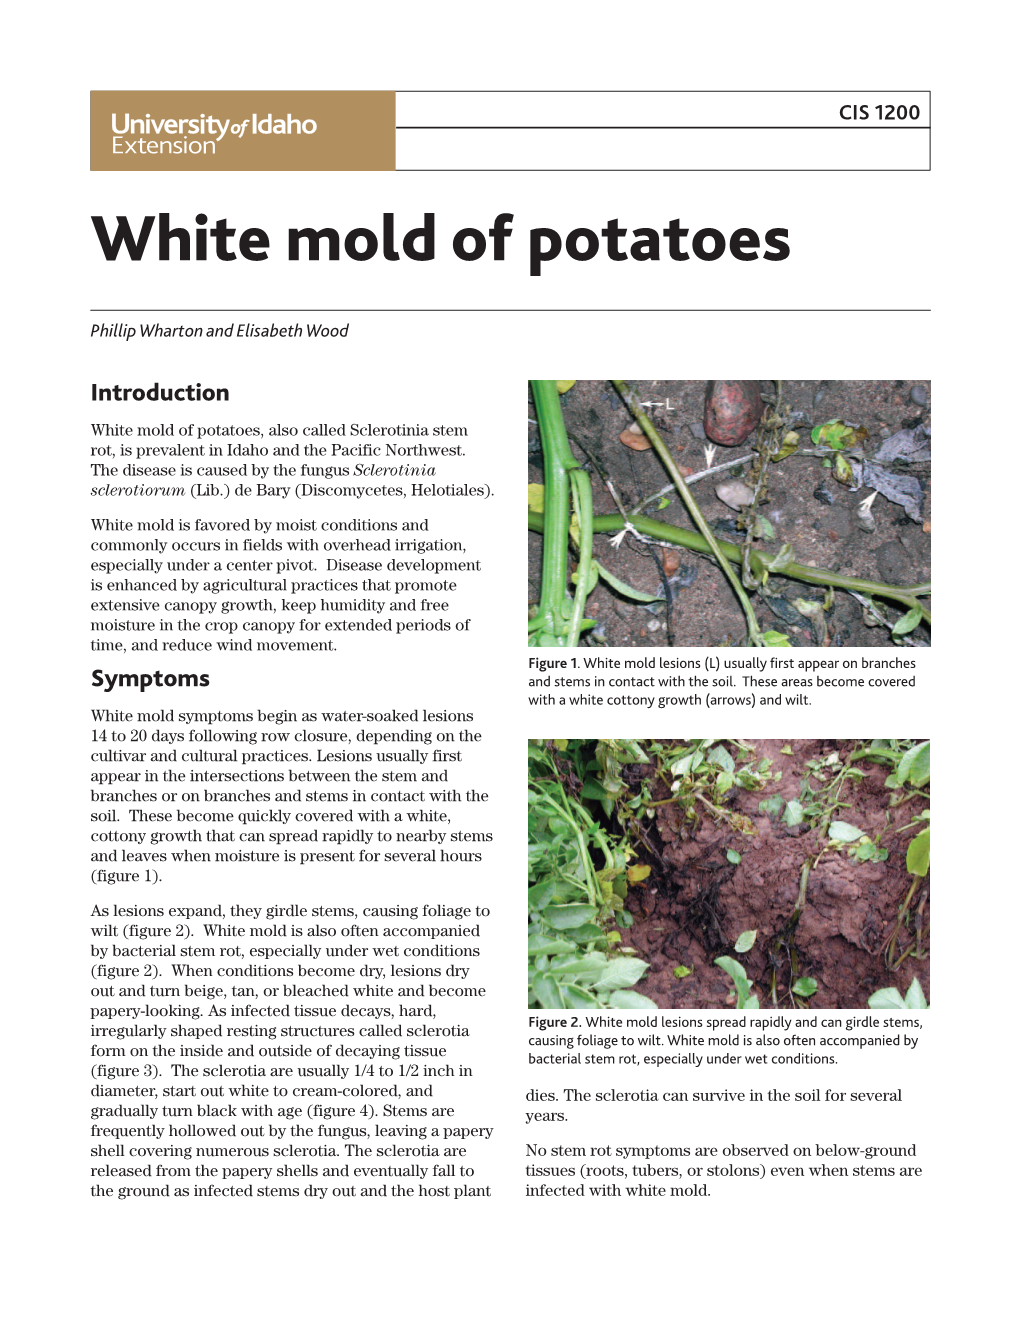 White Mold of Potatoes